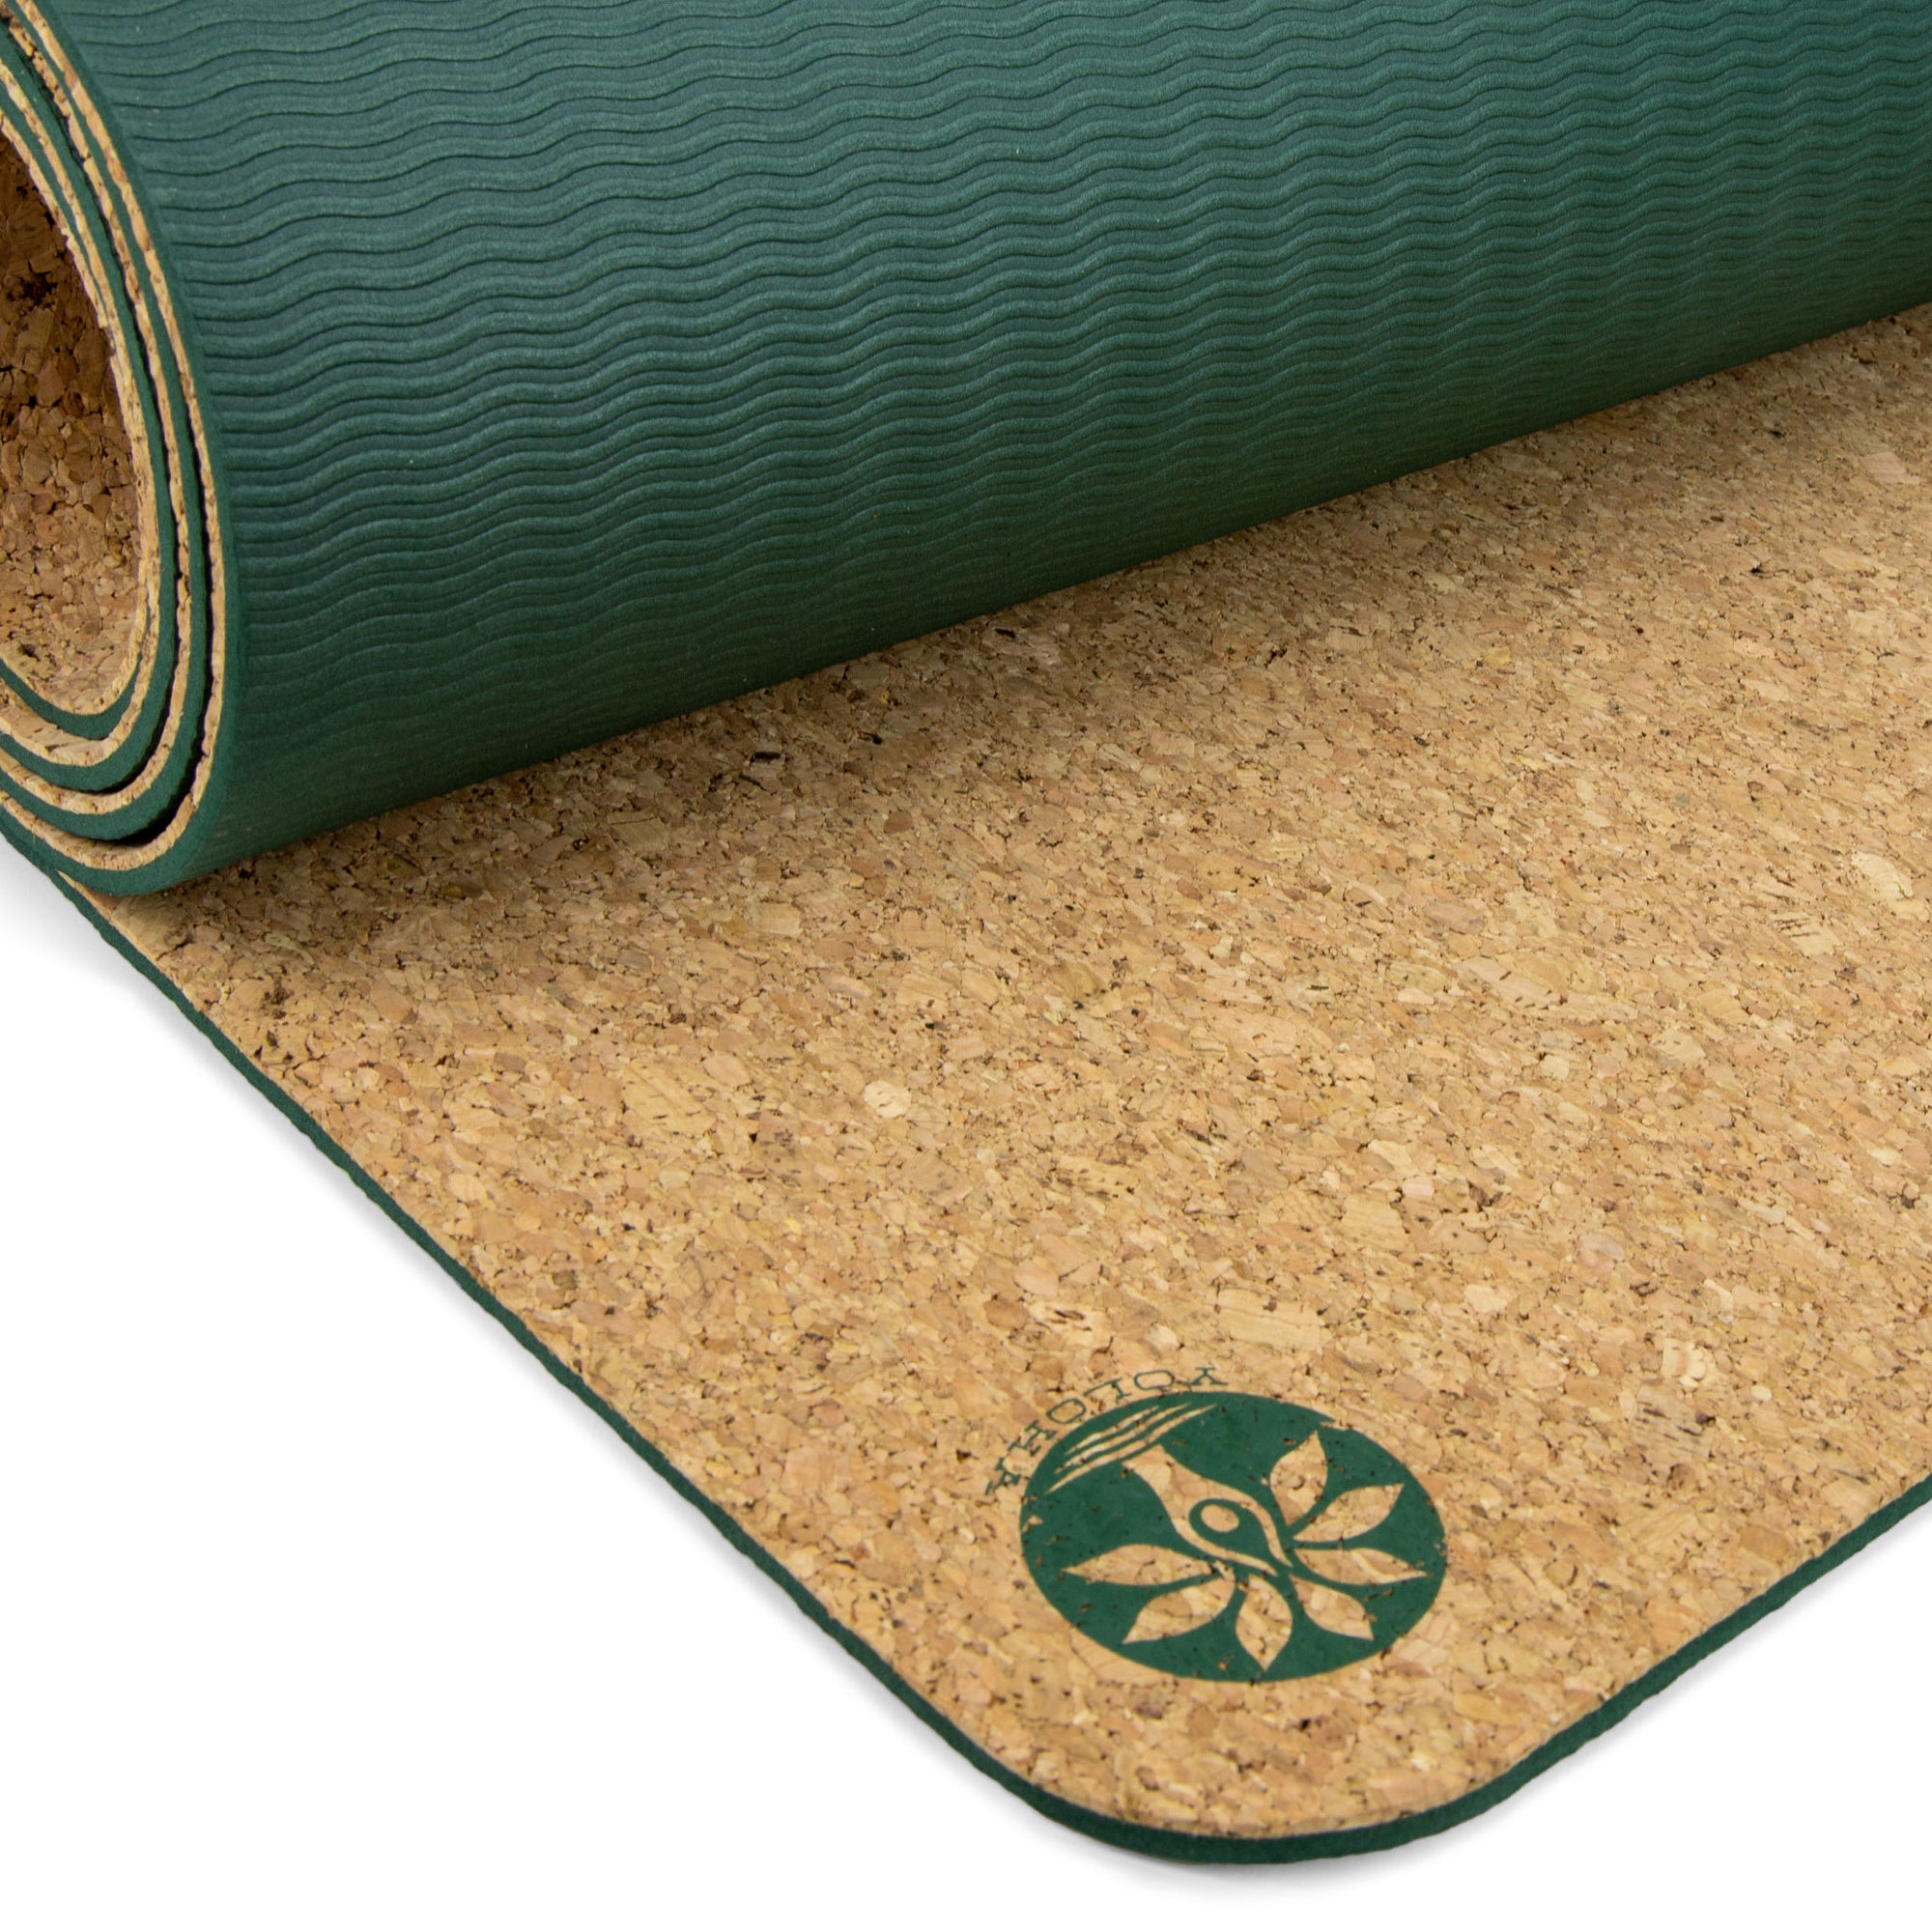  Yoloha Yoga Original Cork Yoga Mat - 80 x 26, Plant Foam, 6mm thick, 100% Vegan